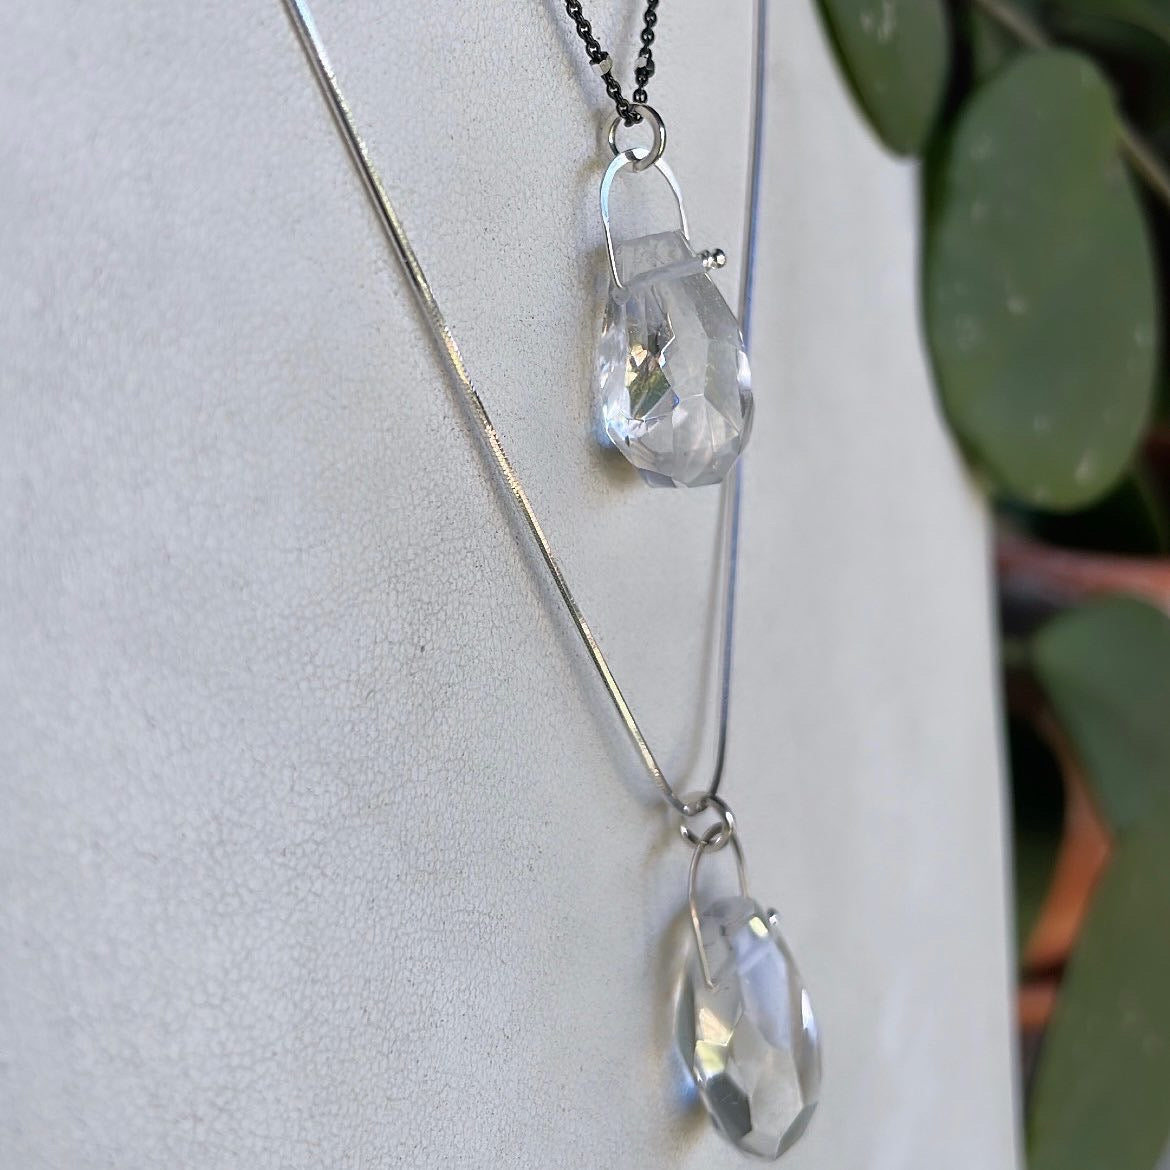 Oxi stirrup quartz crystal necklace-serena kojimoto studio